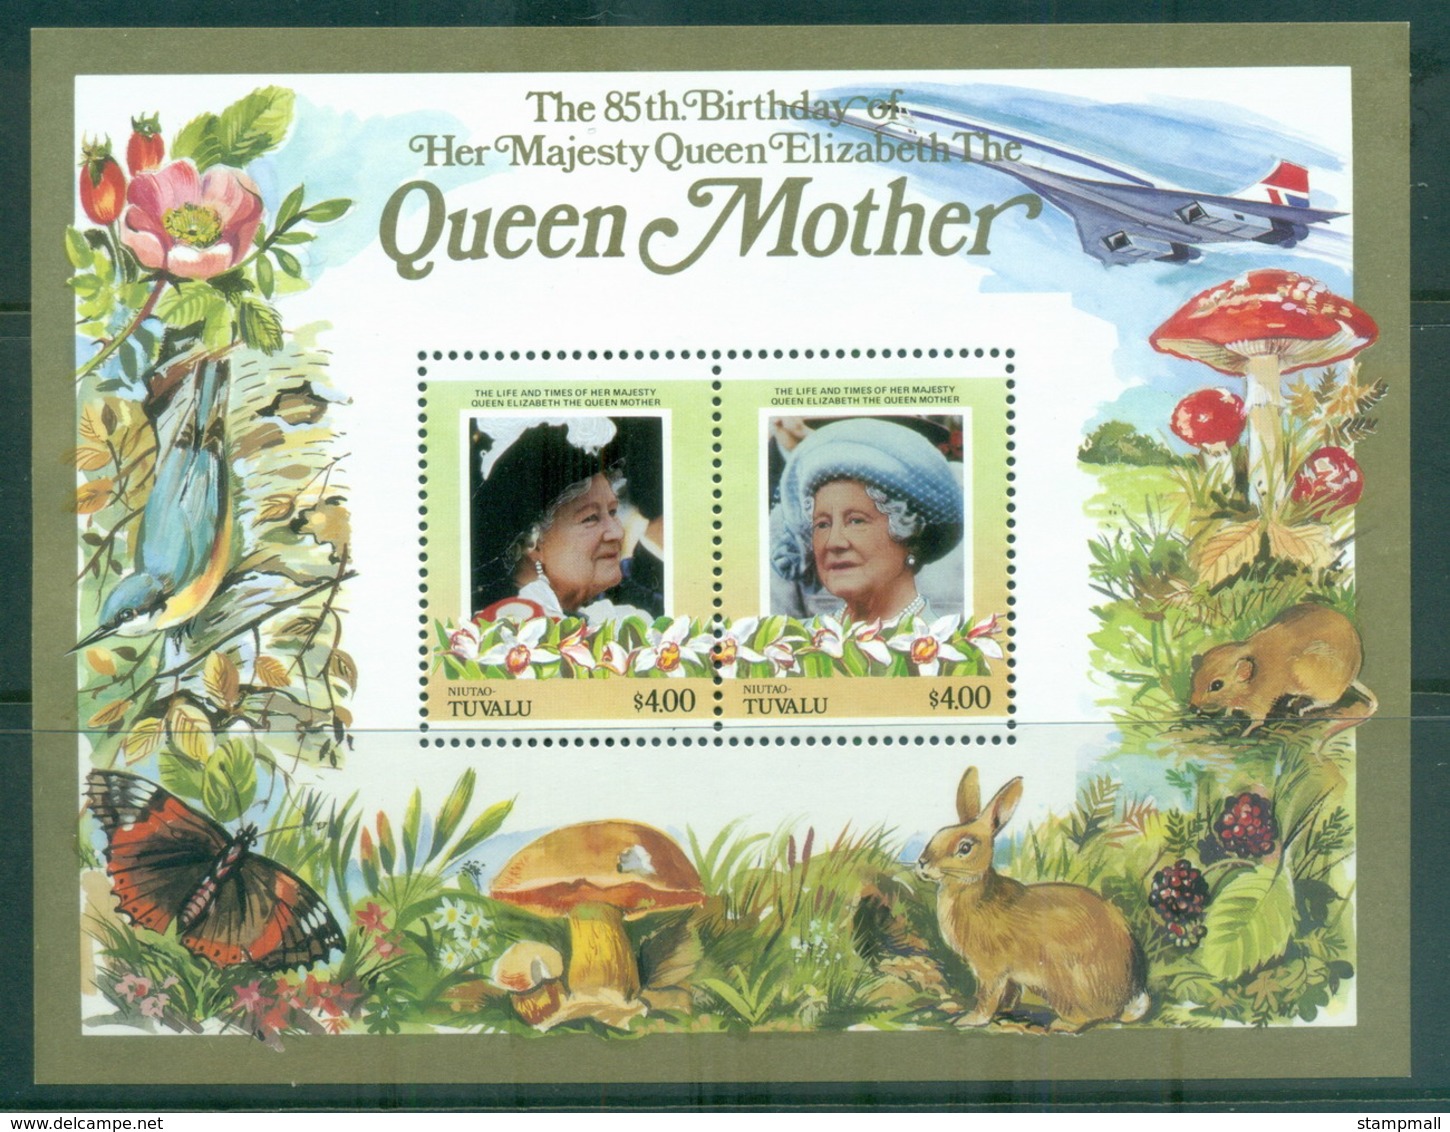 Tuvalu Niutao 1986 Queen Mother 85th Birthday $4 MS MUH - Tuvalu